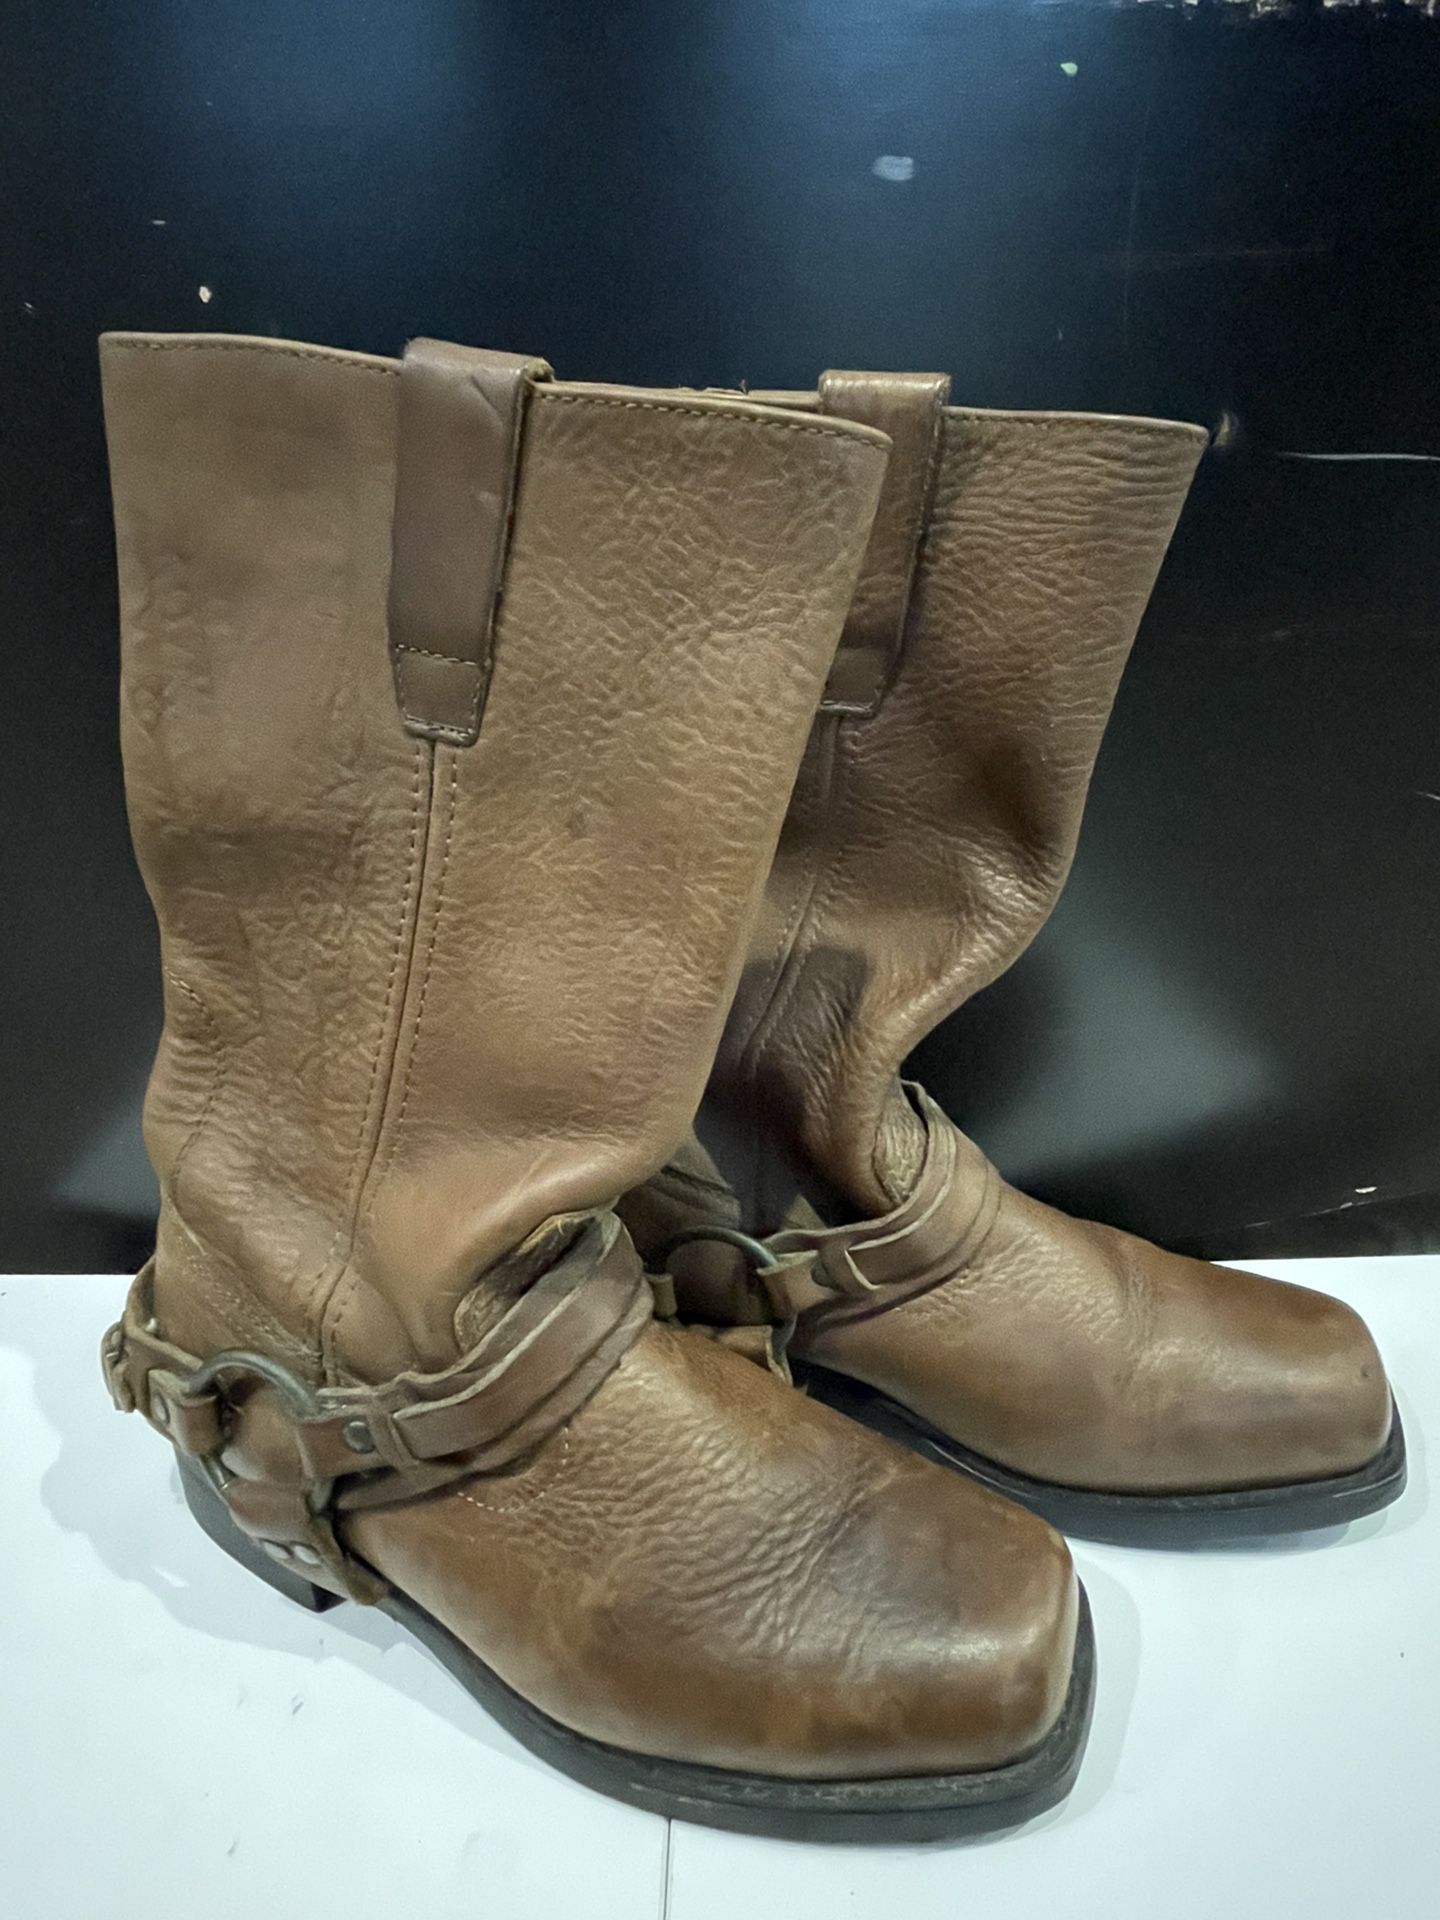 Masterson Boots